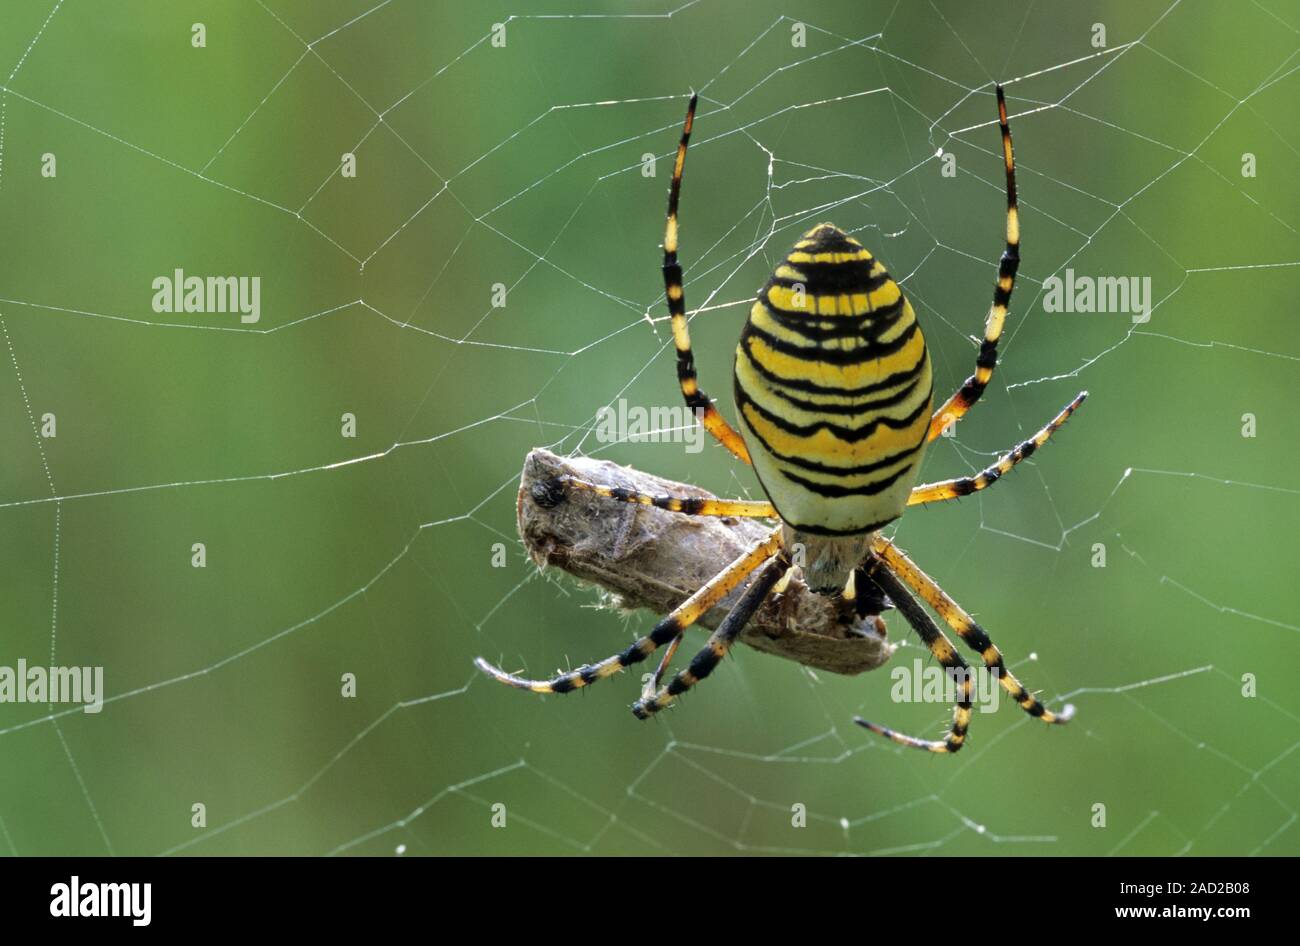 Wasp Spider shows striking yellow and black markings on the abdomen / Argiope bruennichi Stock Photo